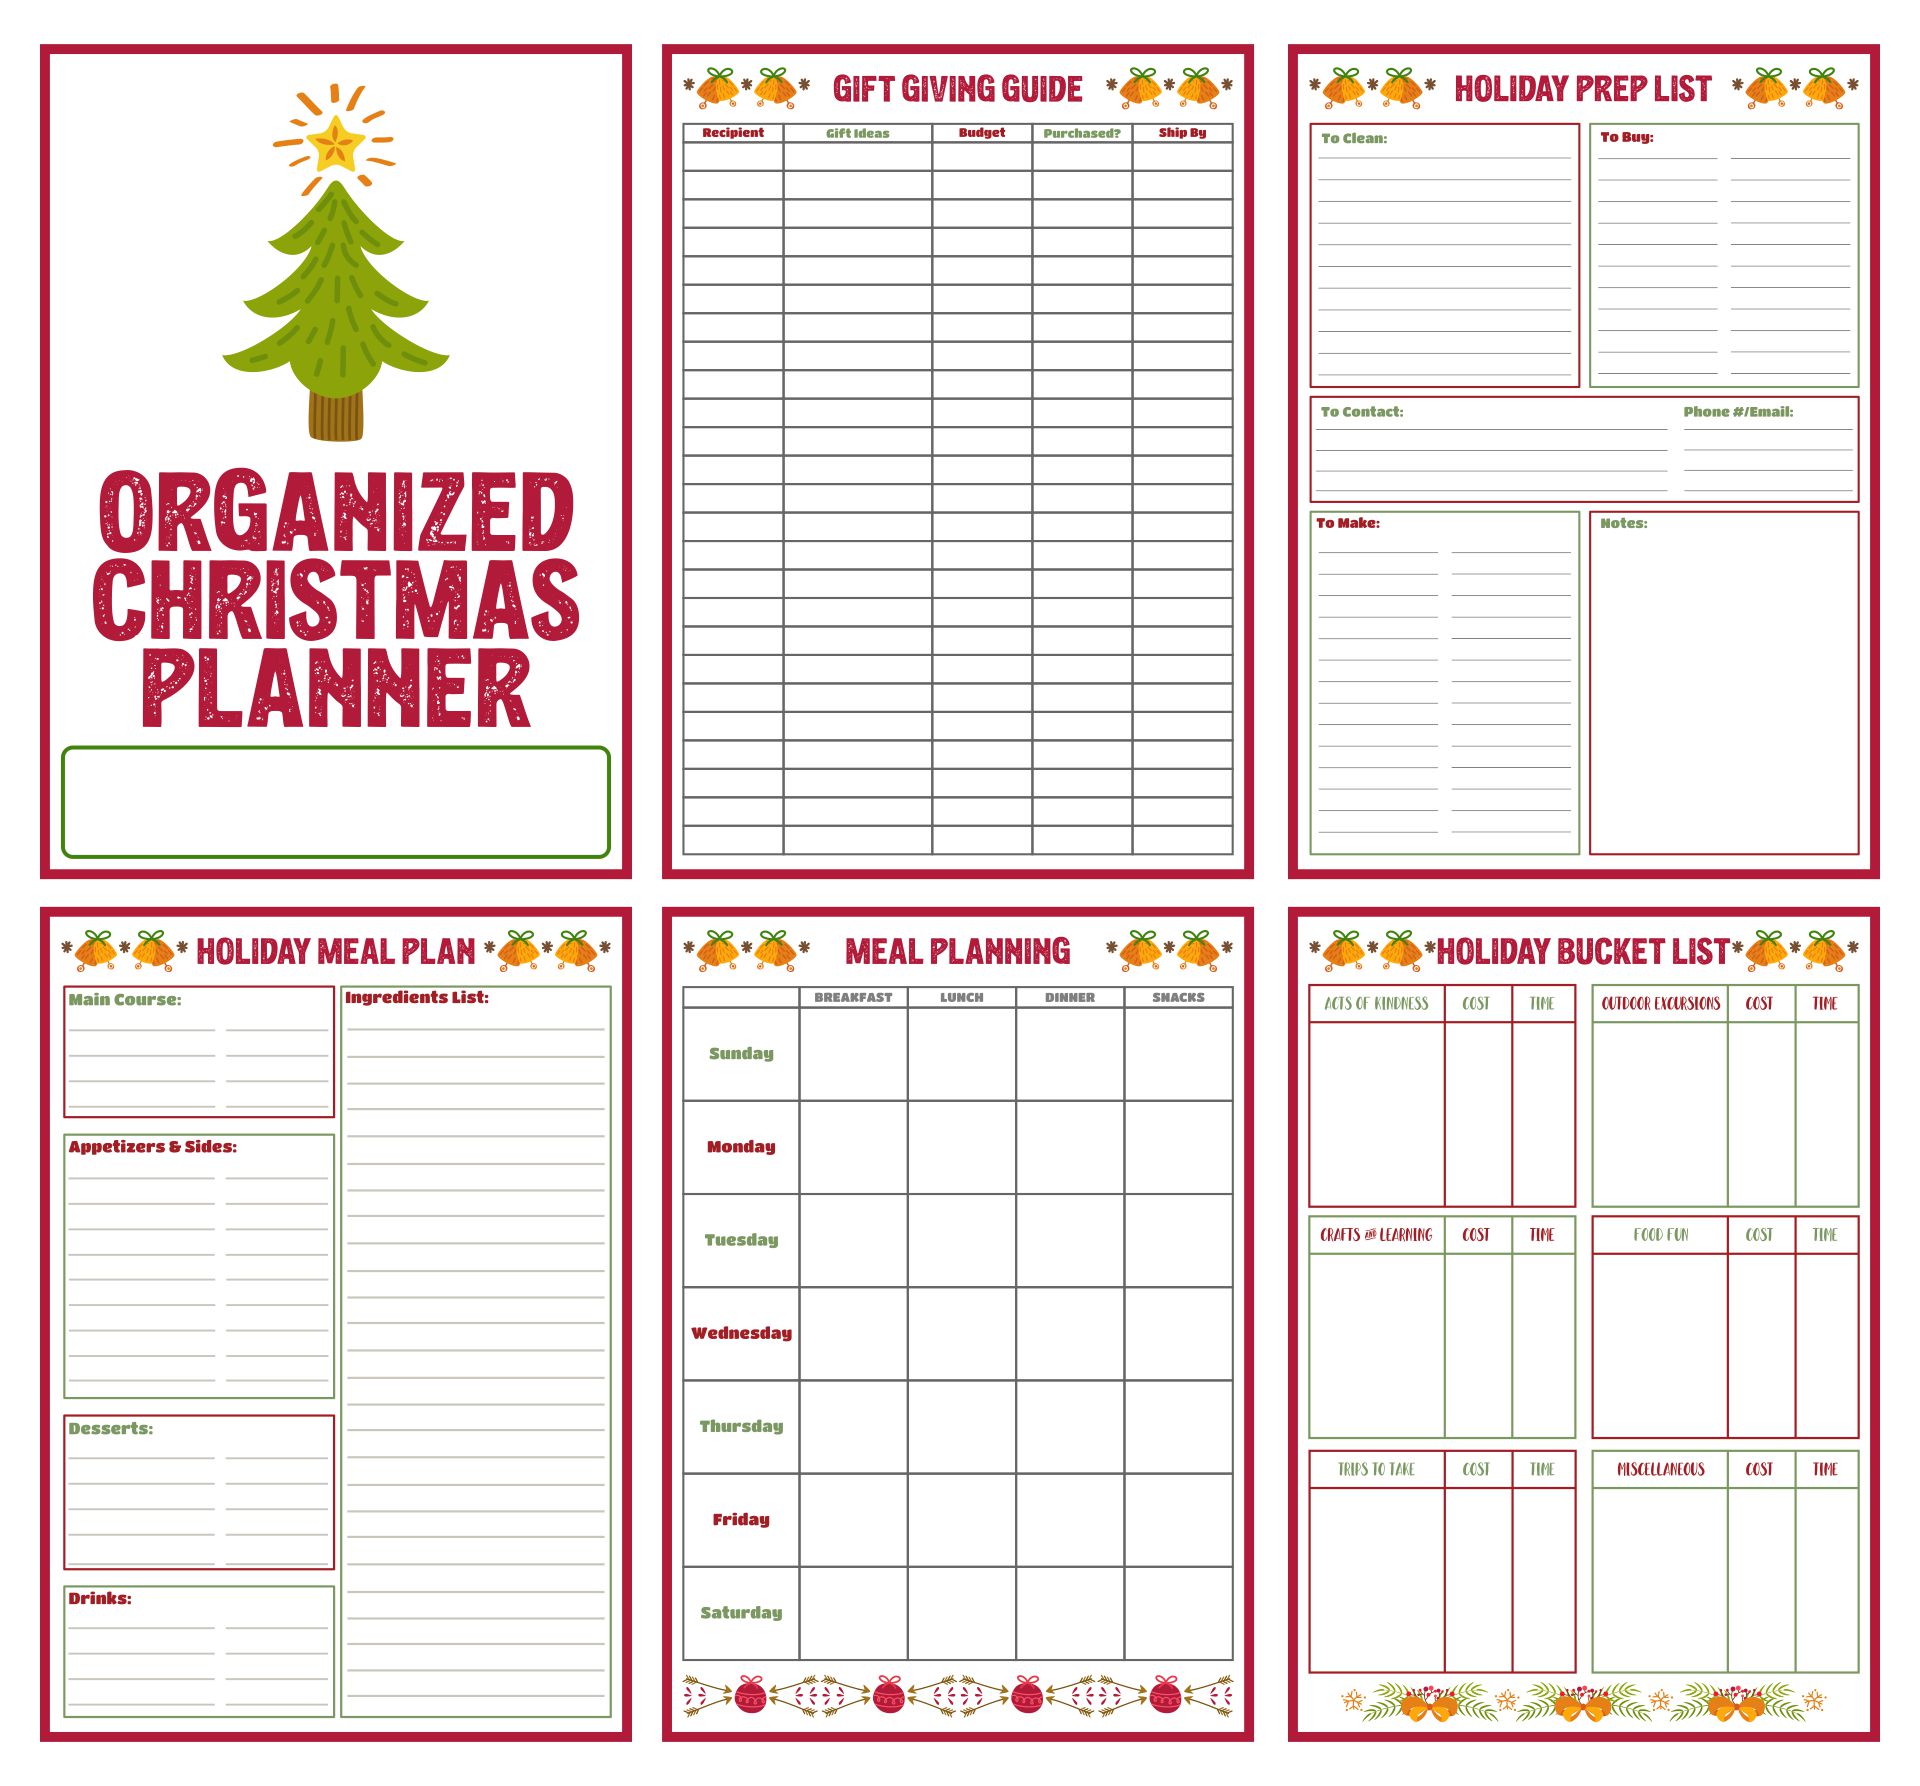 Organized Christmas Planner